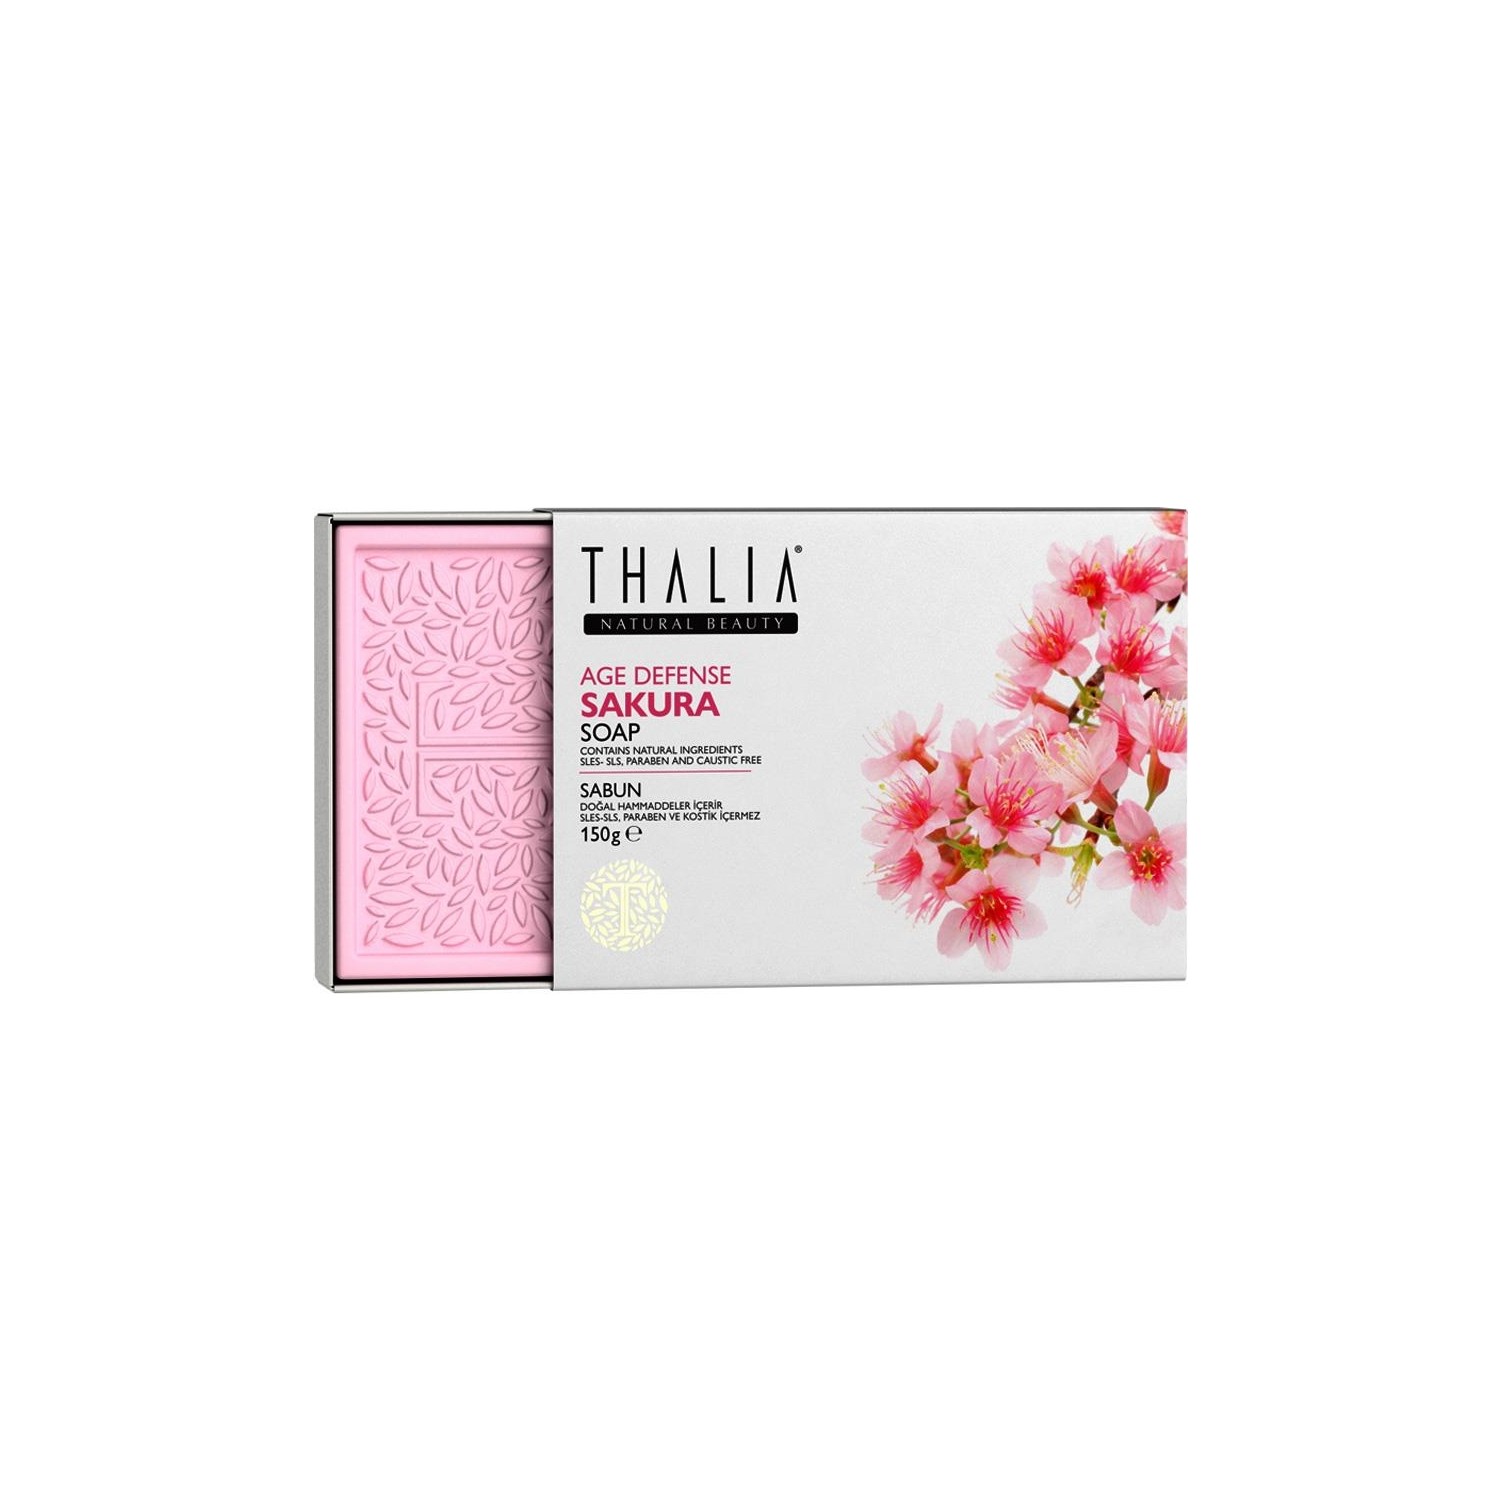 Натуральное мыло Thalia с экстрактом сакуры thalia natural beauty age defense sakura face cleansing foam